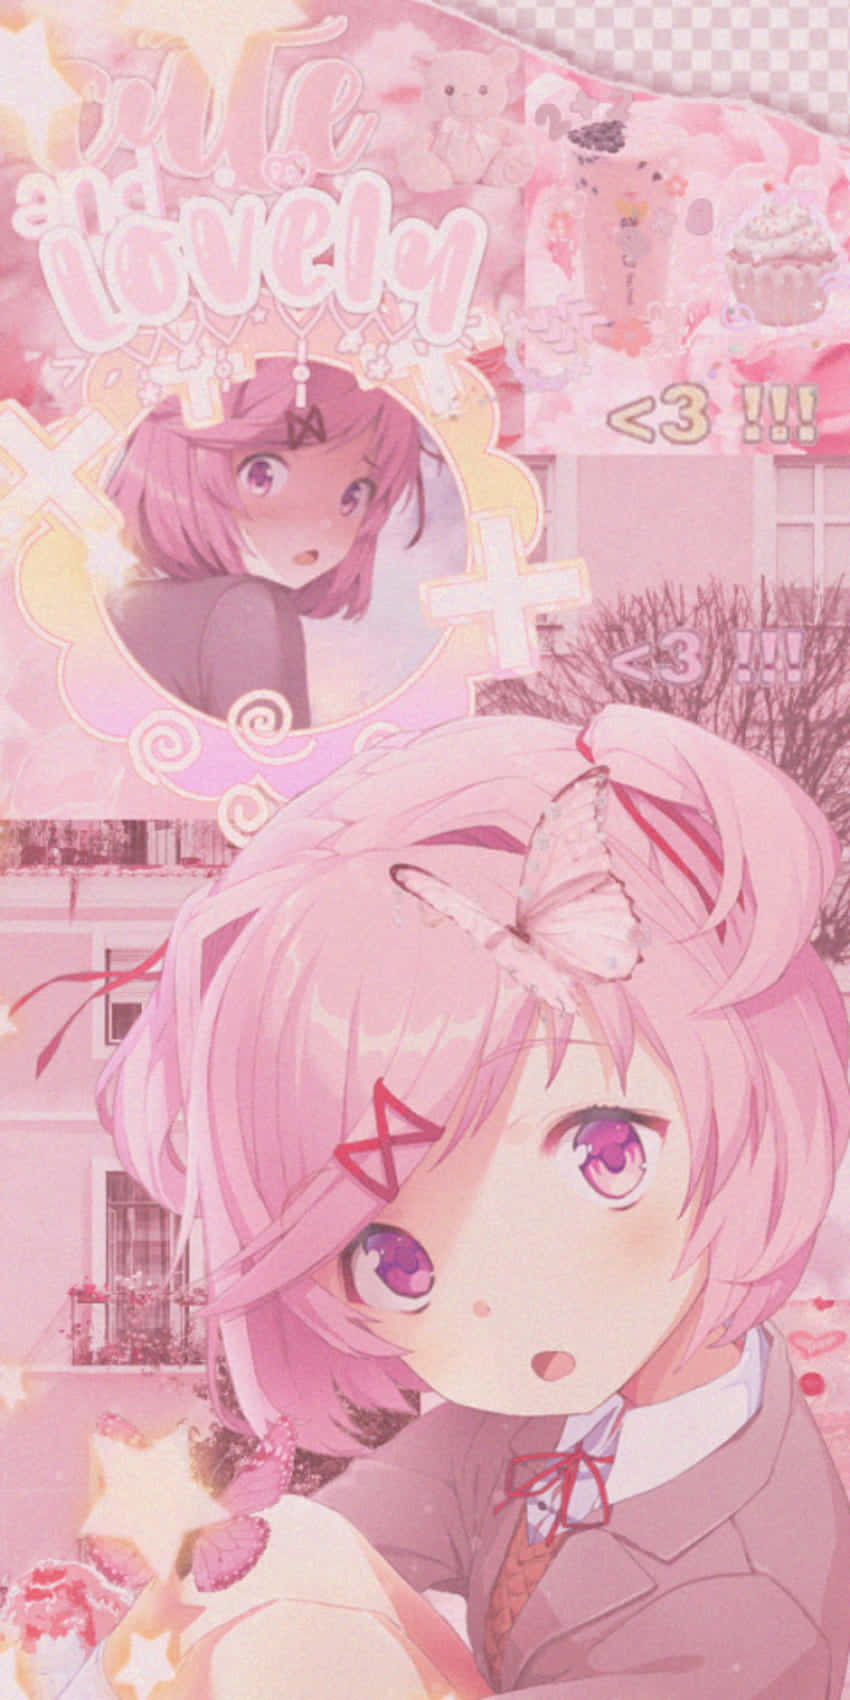 Kawaii Pastel Anime Artwork.jpg Wallpaper